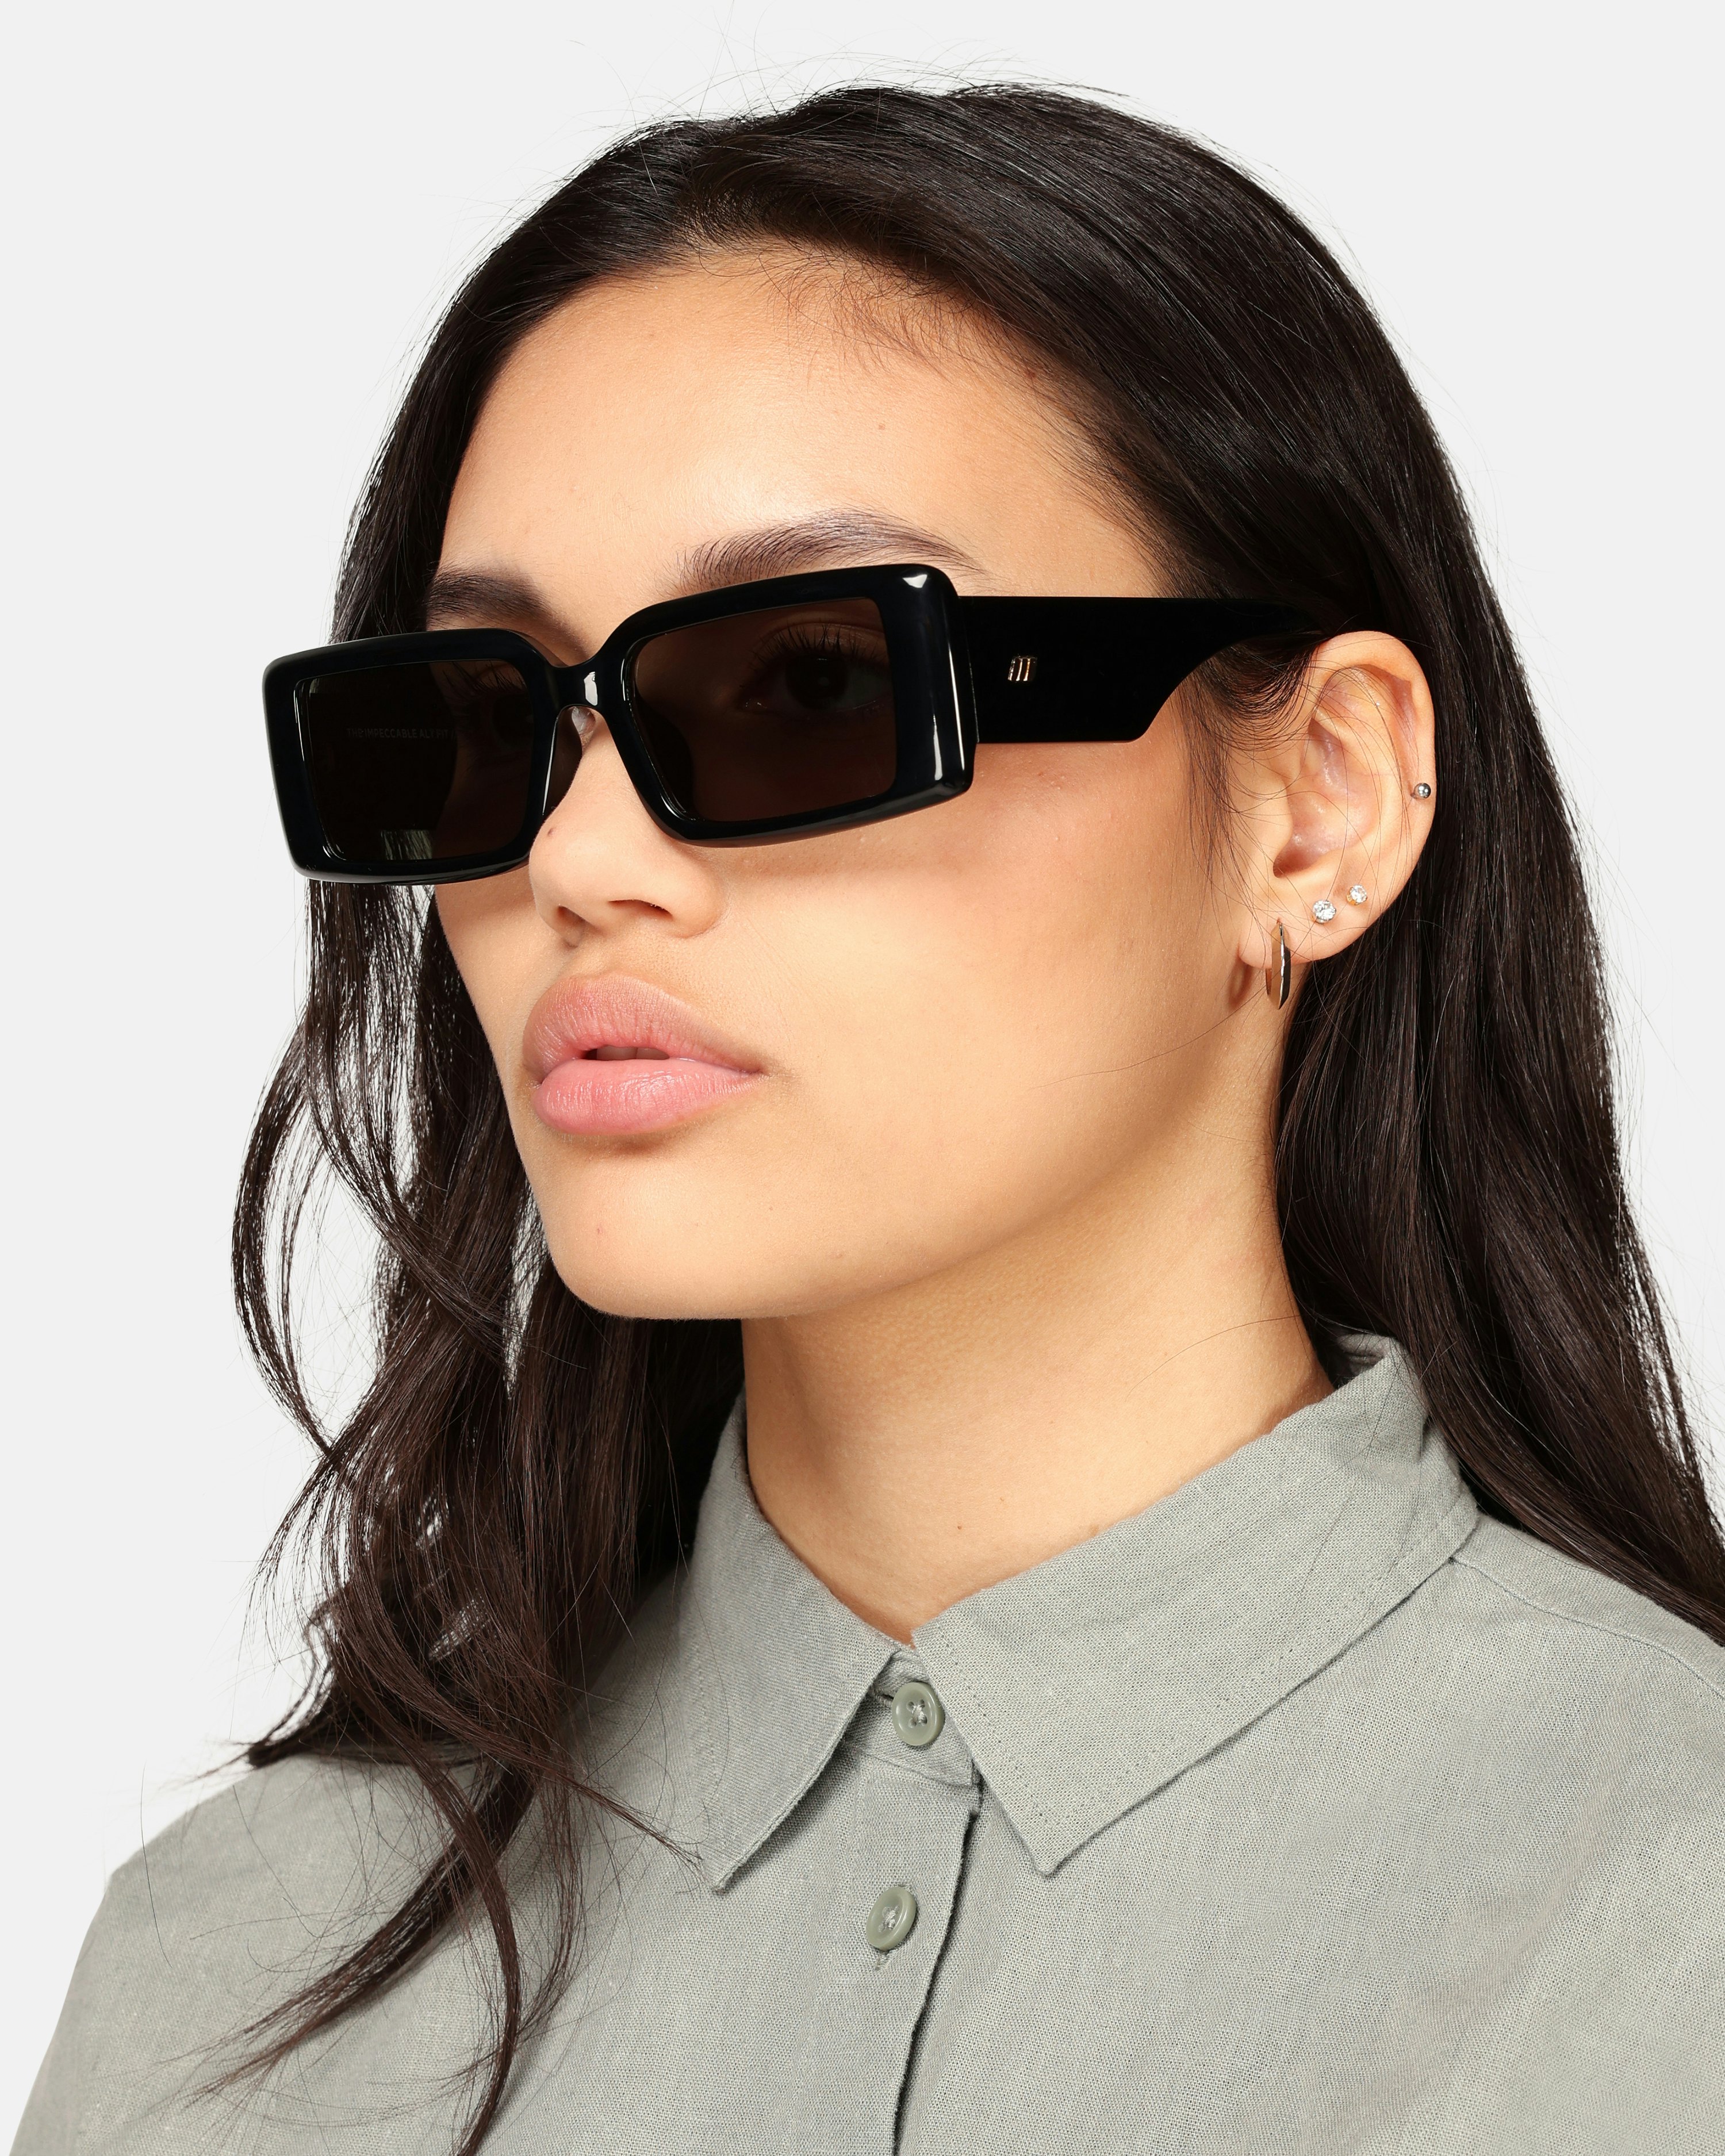 Celine's Impeccable Sunglasses Are an All-Season Essential